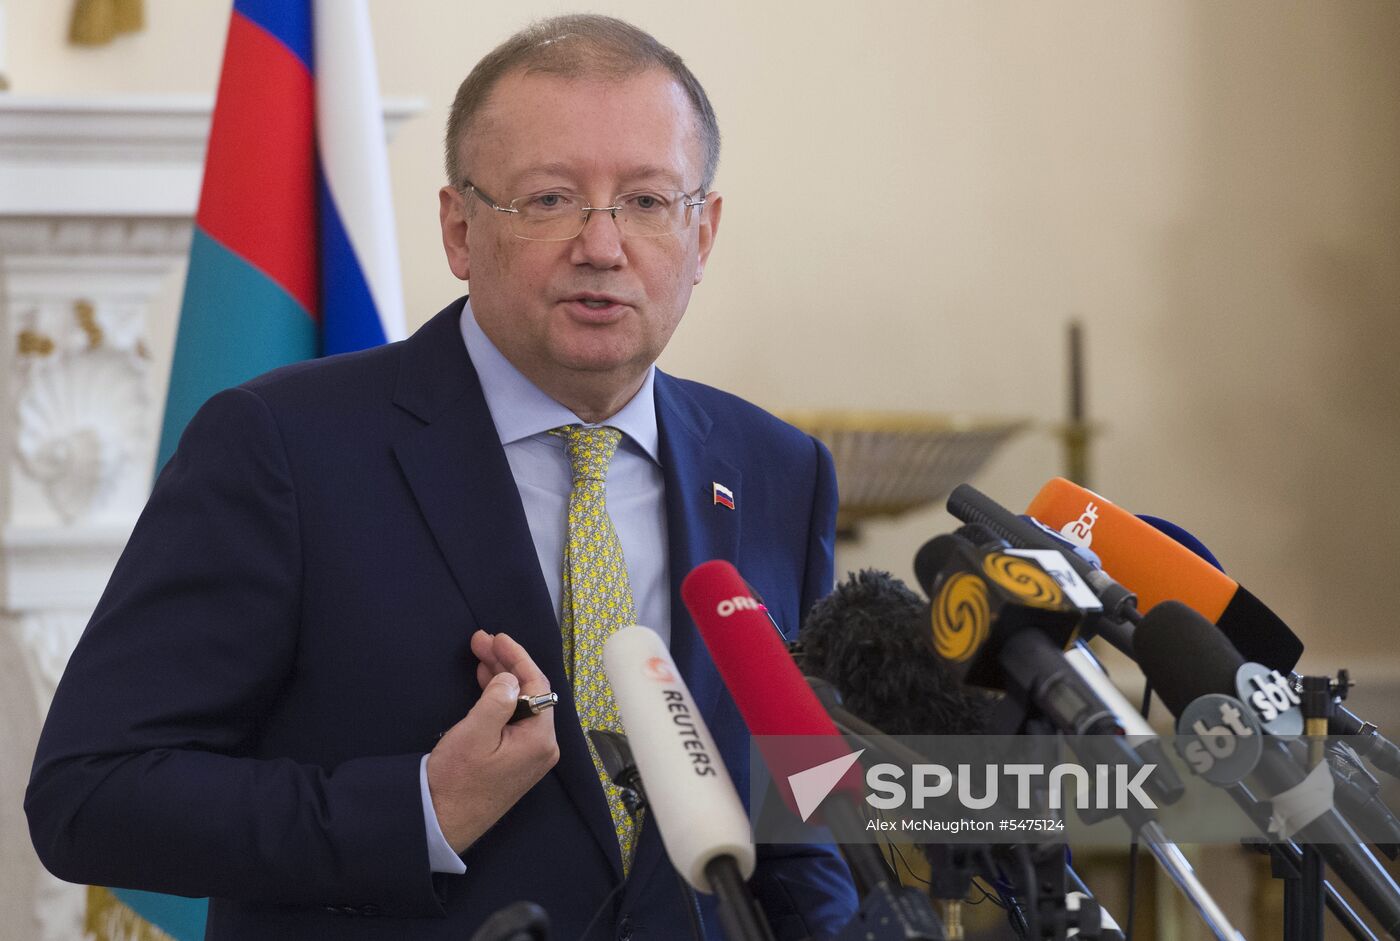 Russian Ambassador to UK Alexander Yakovenko's press conference